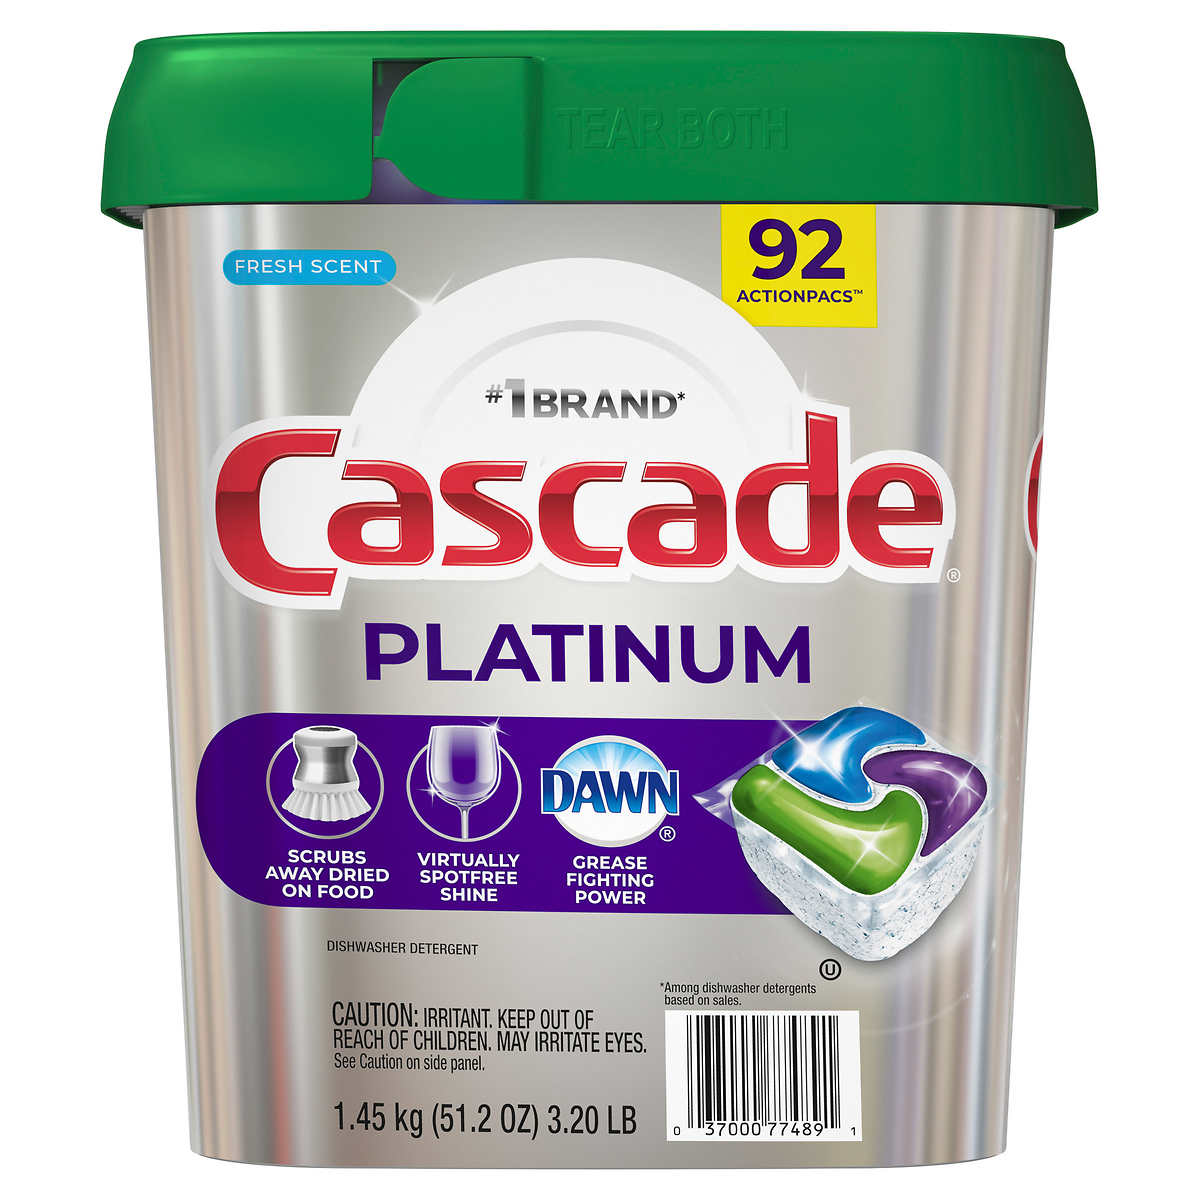 Cascade Platinum Dishwasher Detergent Actionpacs 92 Count,Ball Python Enclosure